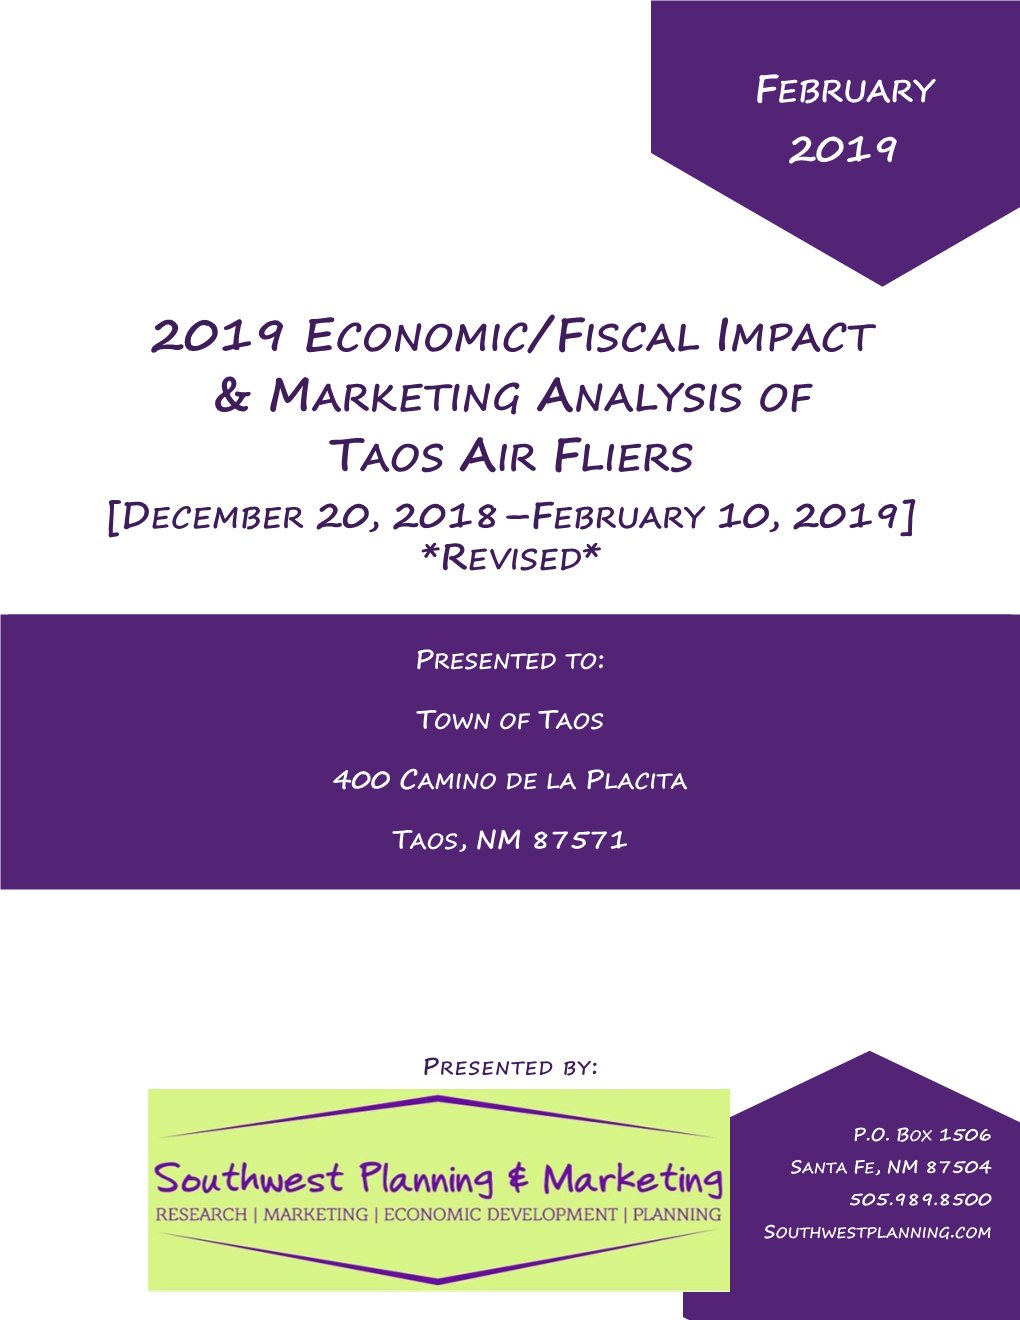 2019 Economic/Fiscal Impact & Marketing Analysis of Taos